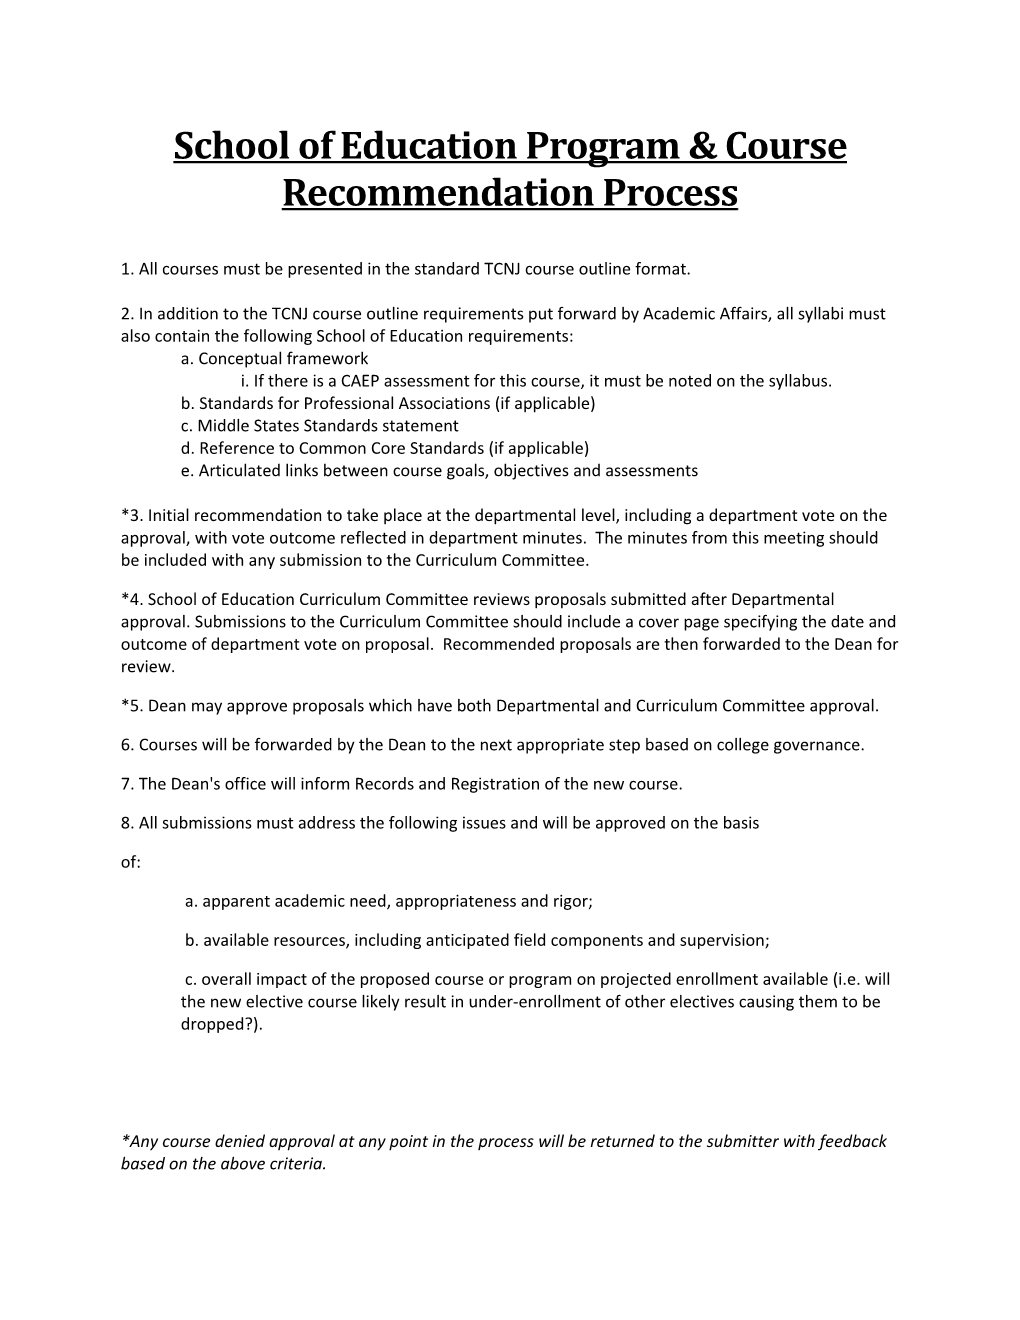 School of Education Program & Course Recommendation Process